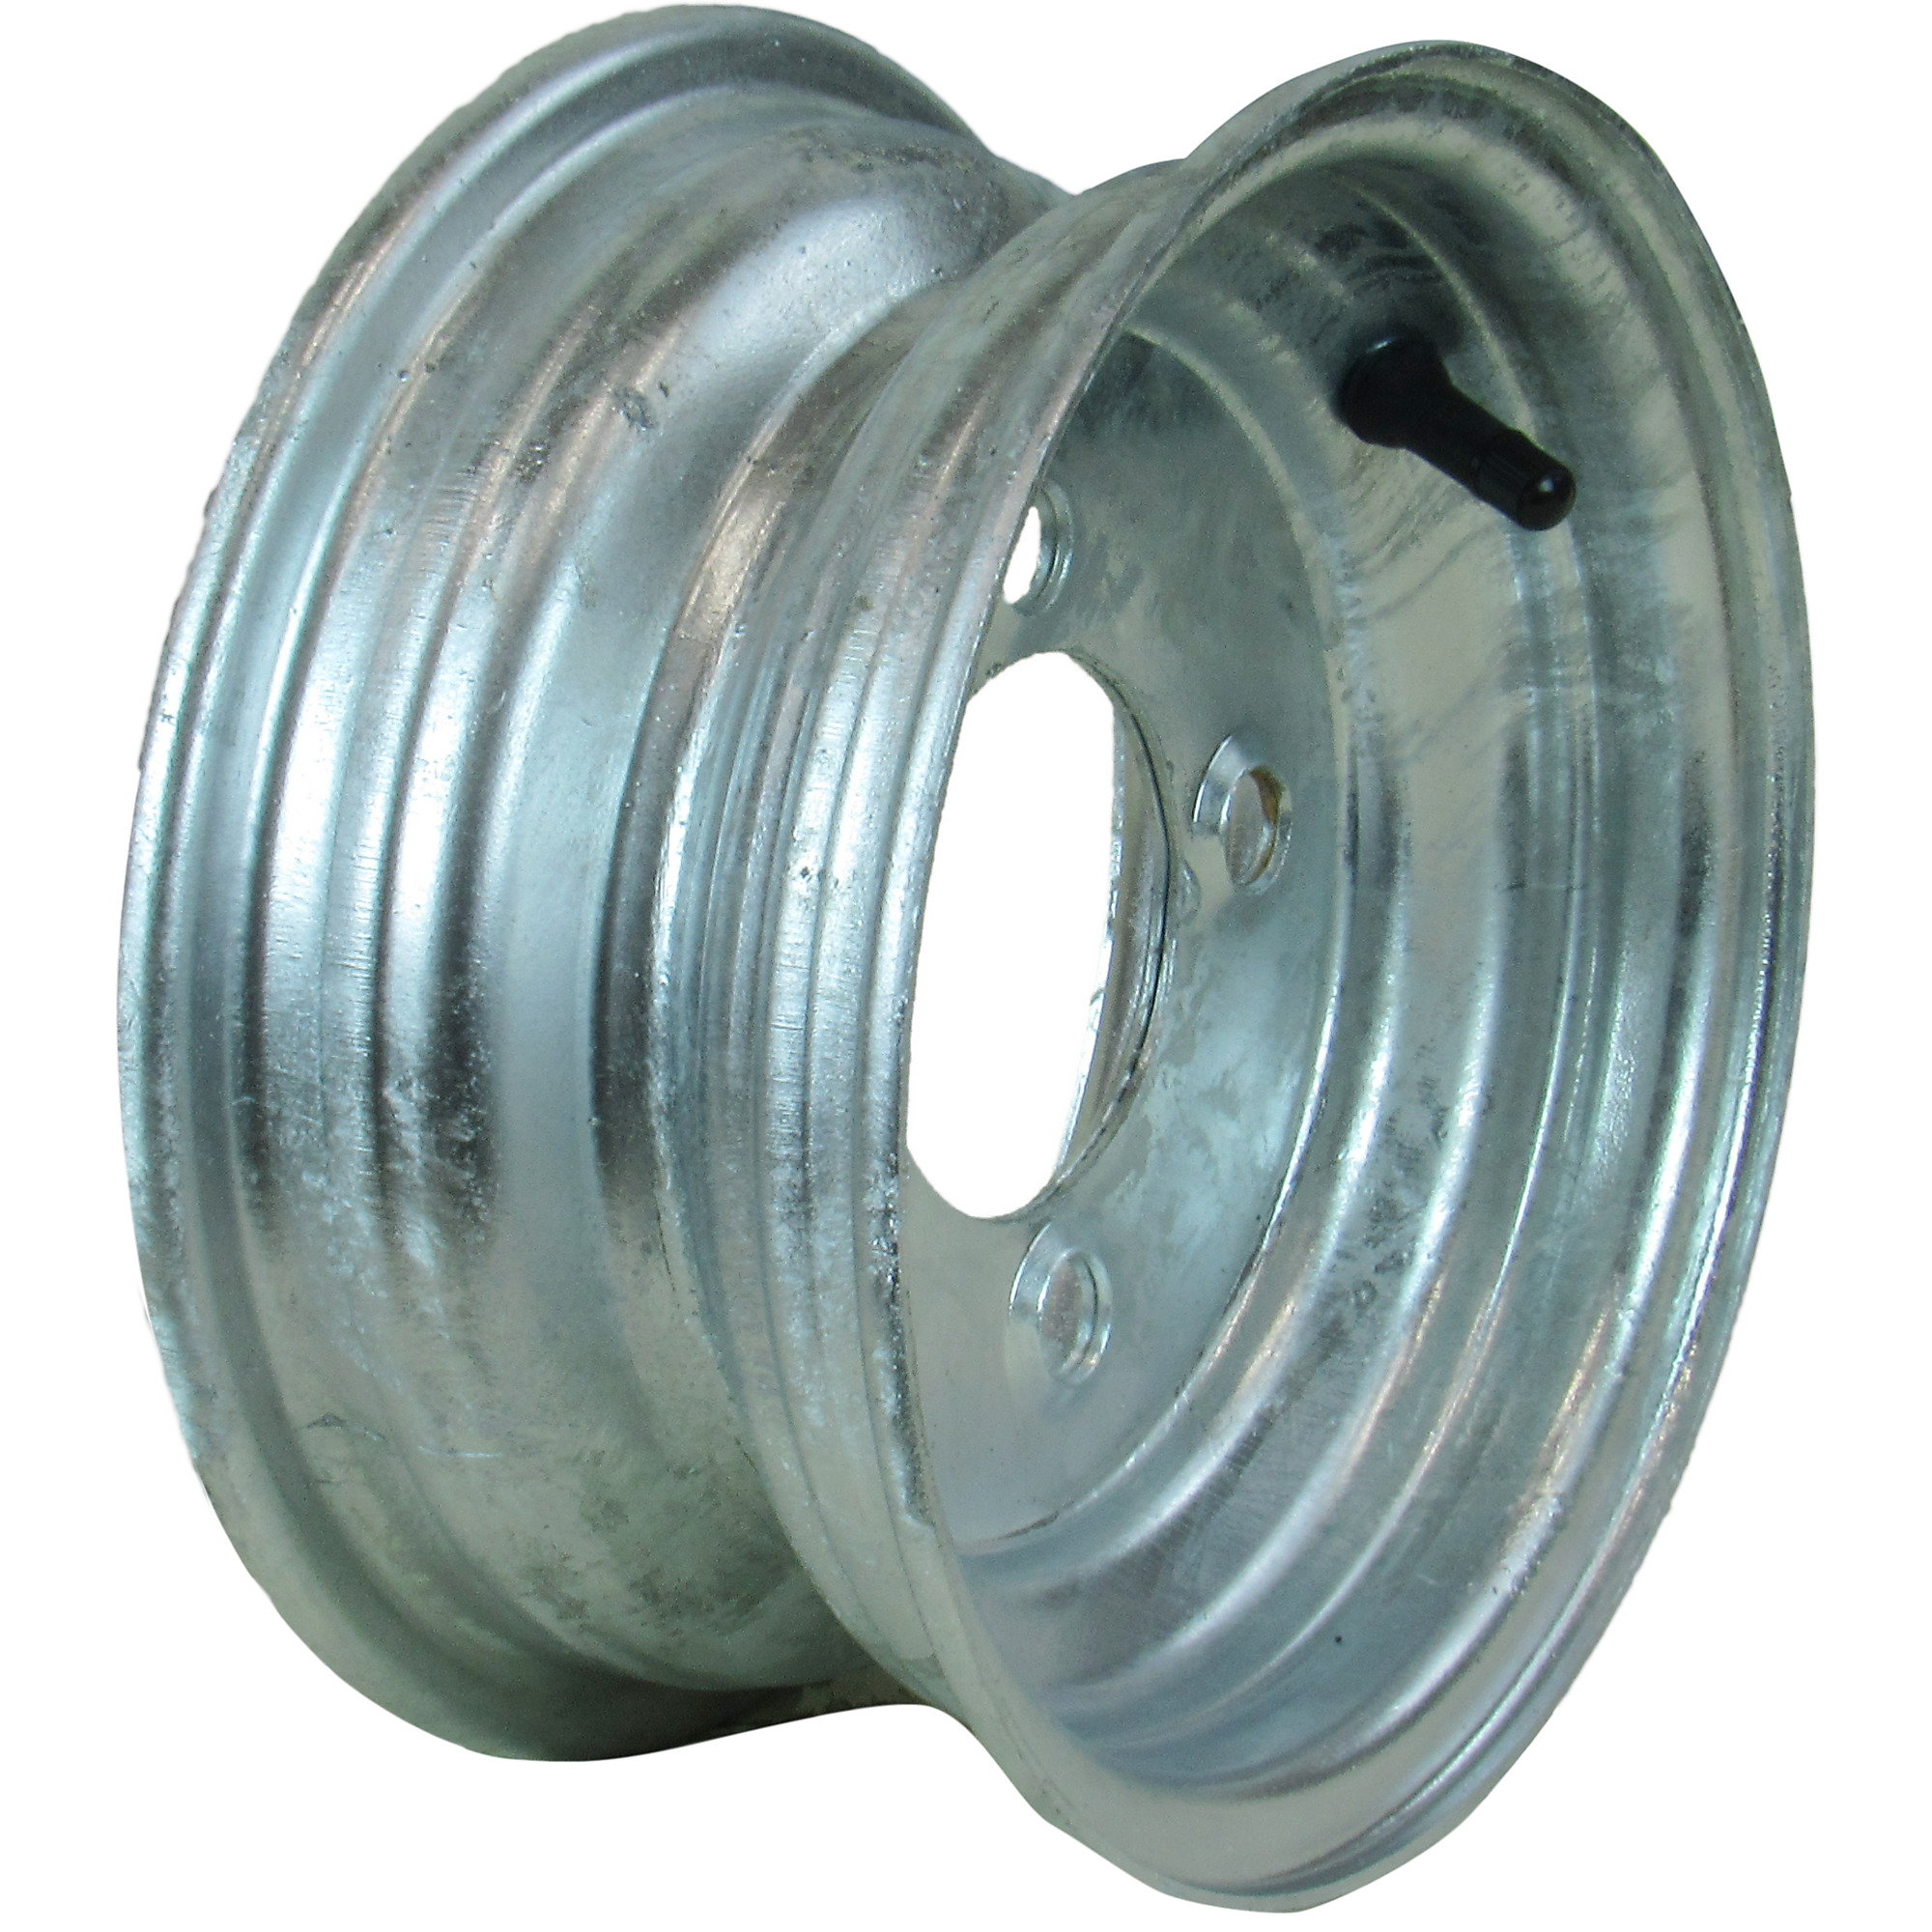 HI-RUN, Galvanized Steel Wheel for Highway Trailer, Tire Size 8X3.75 4-4, Bolt Holes (qty.) 4, Model NB2008